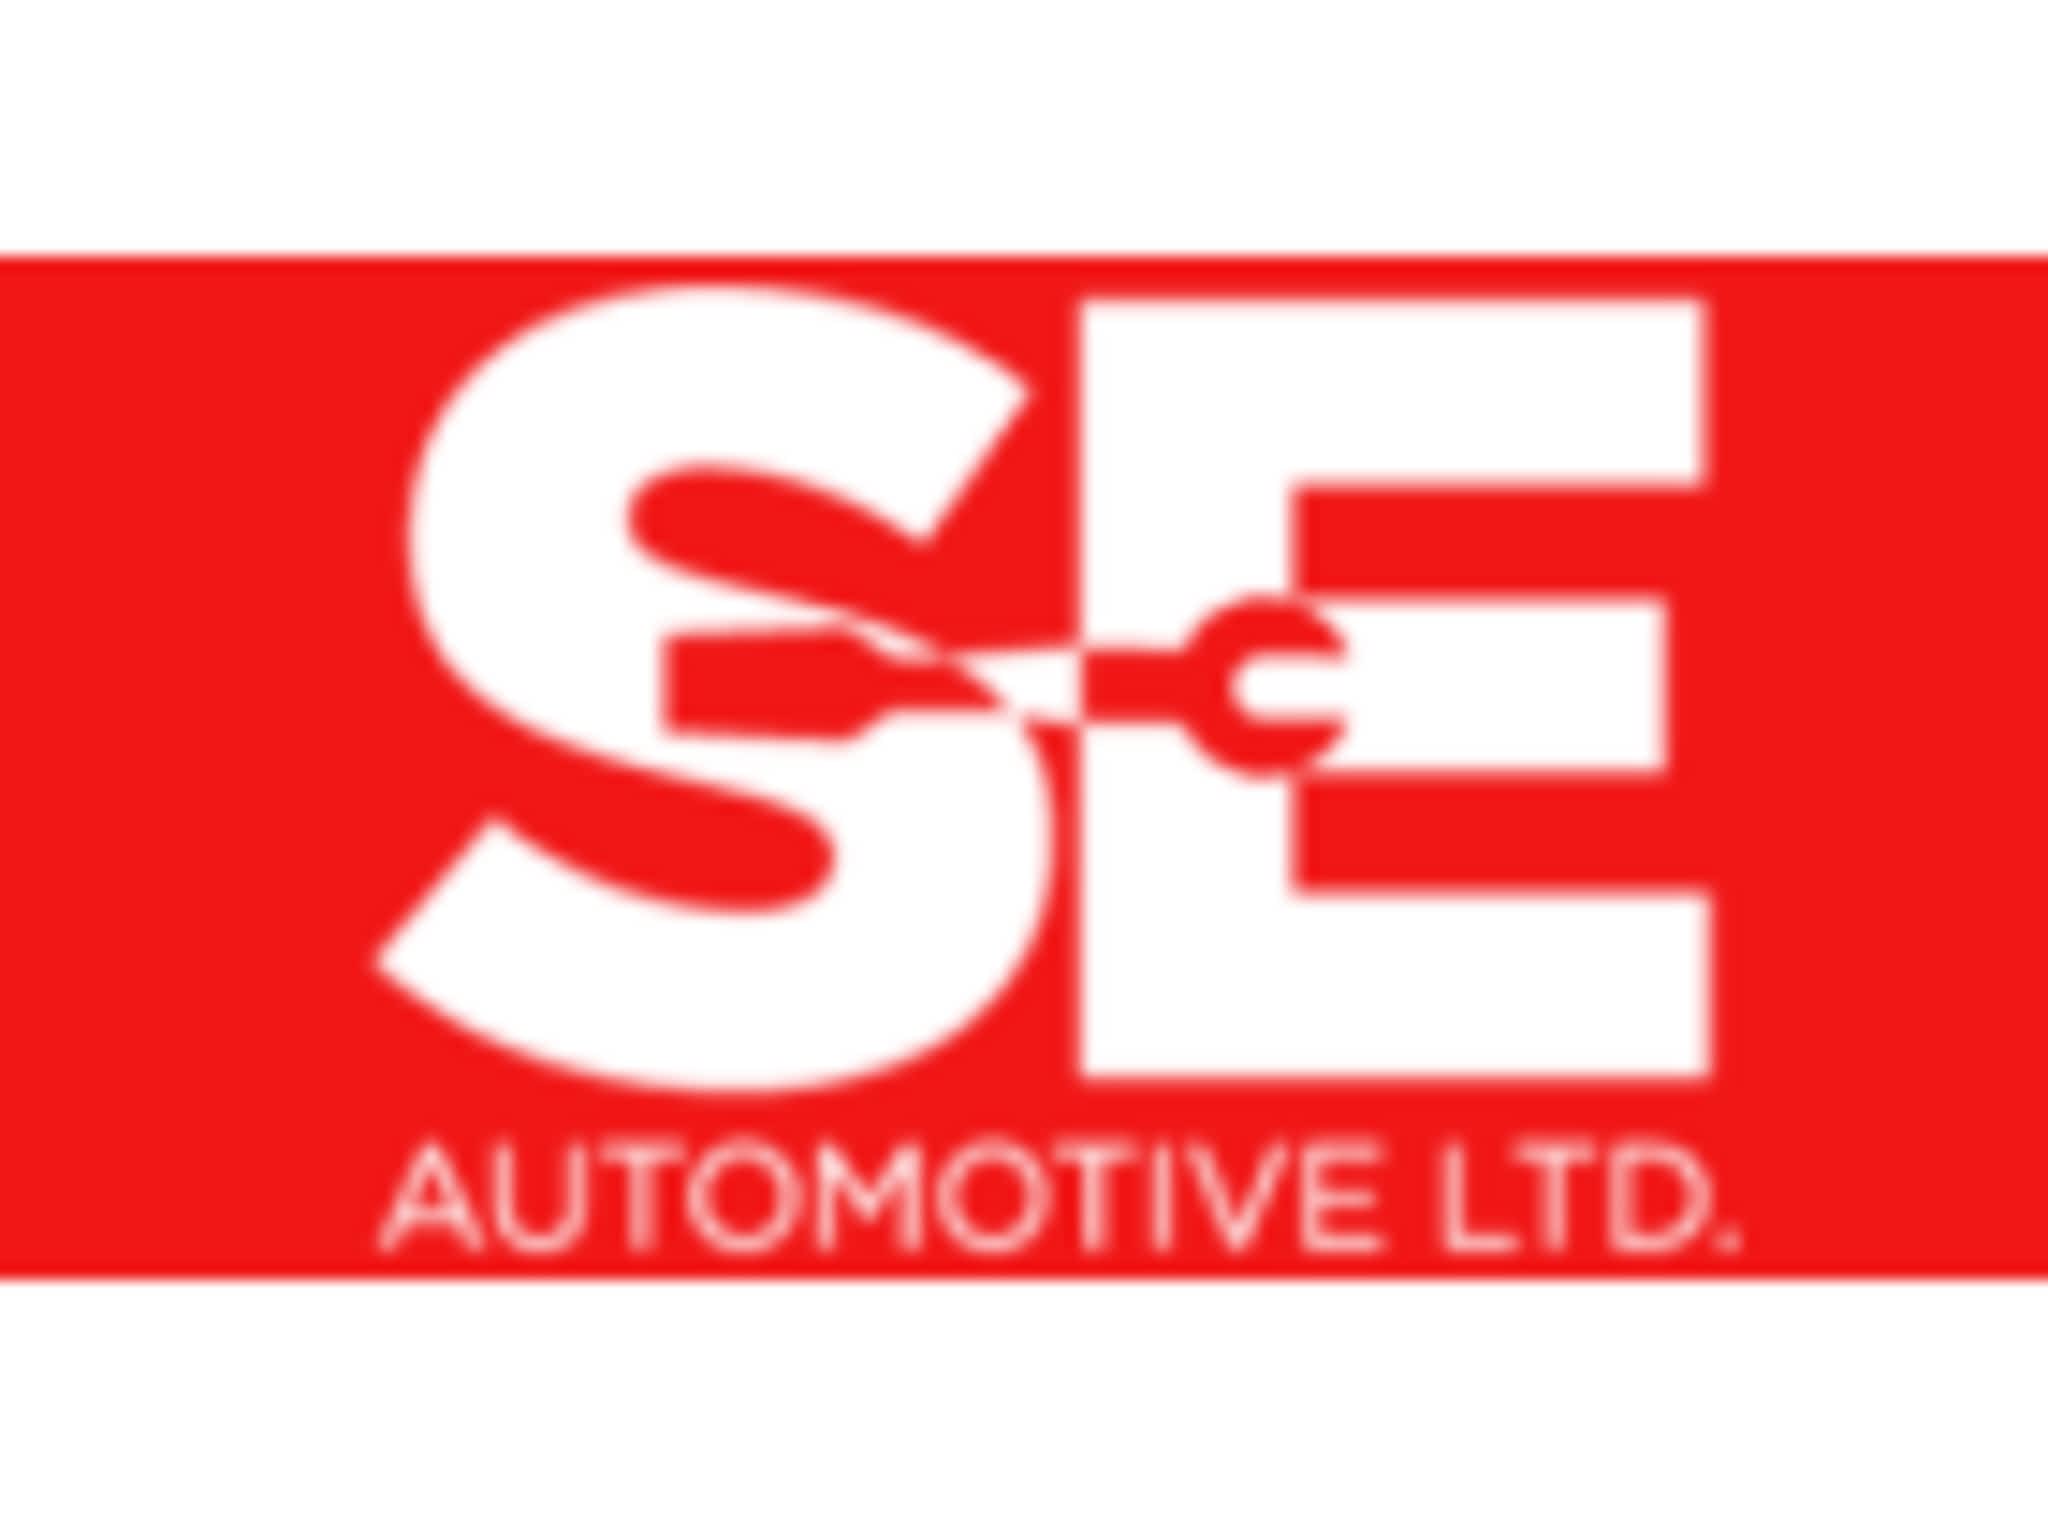 photo S&E Automotive Ltd